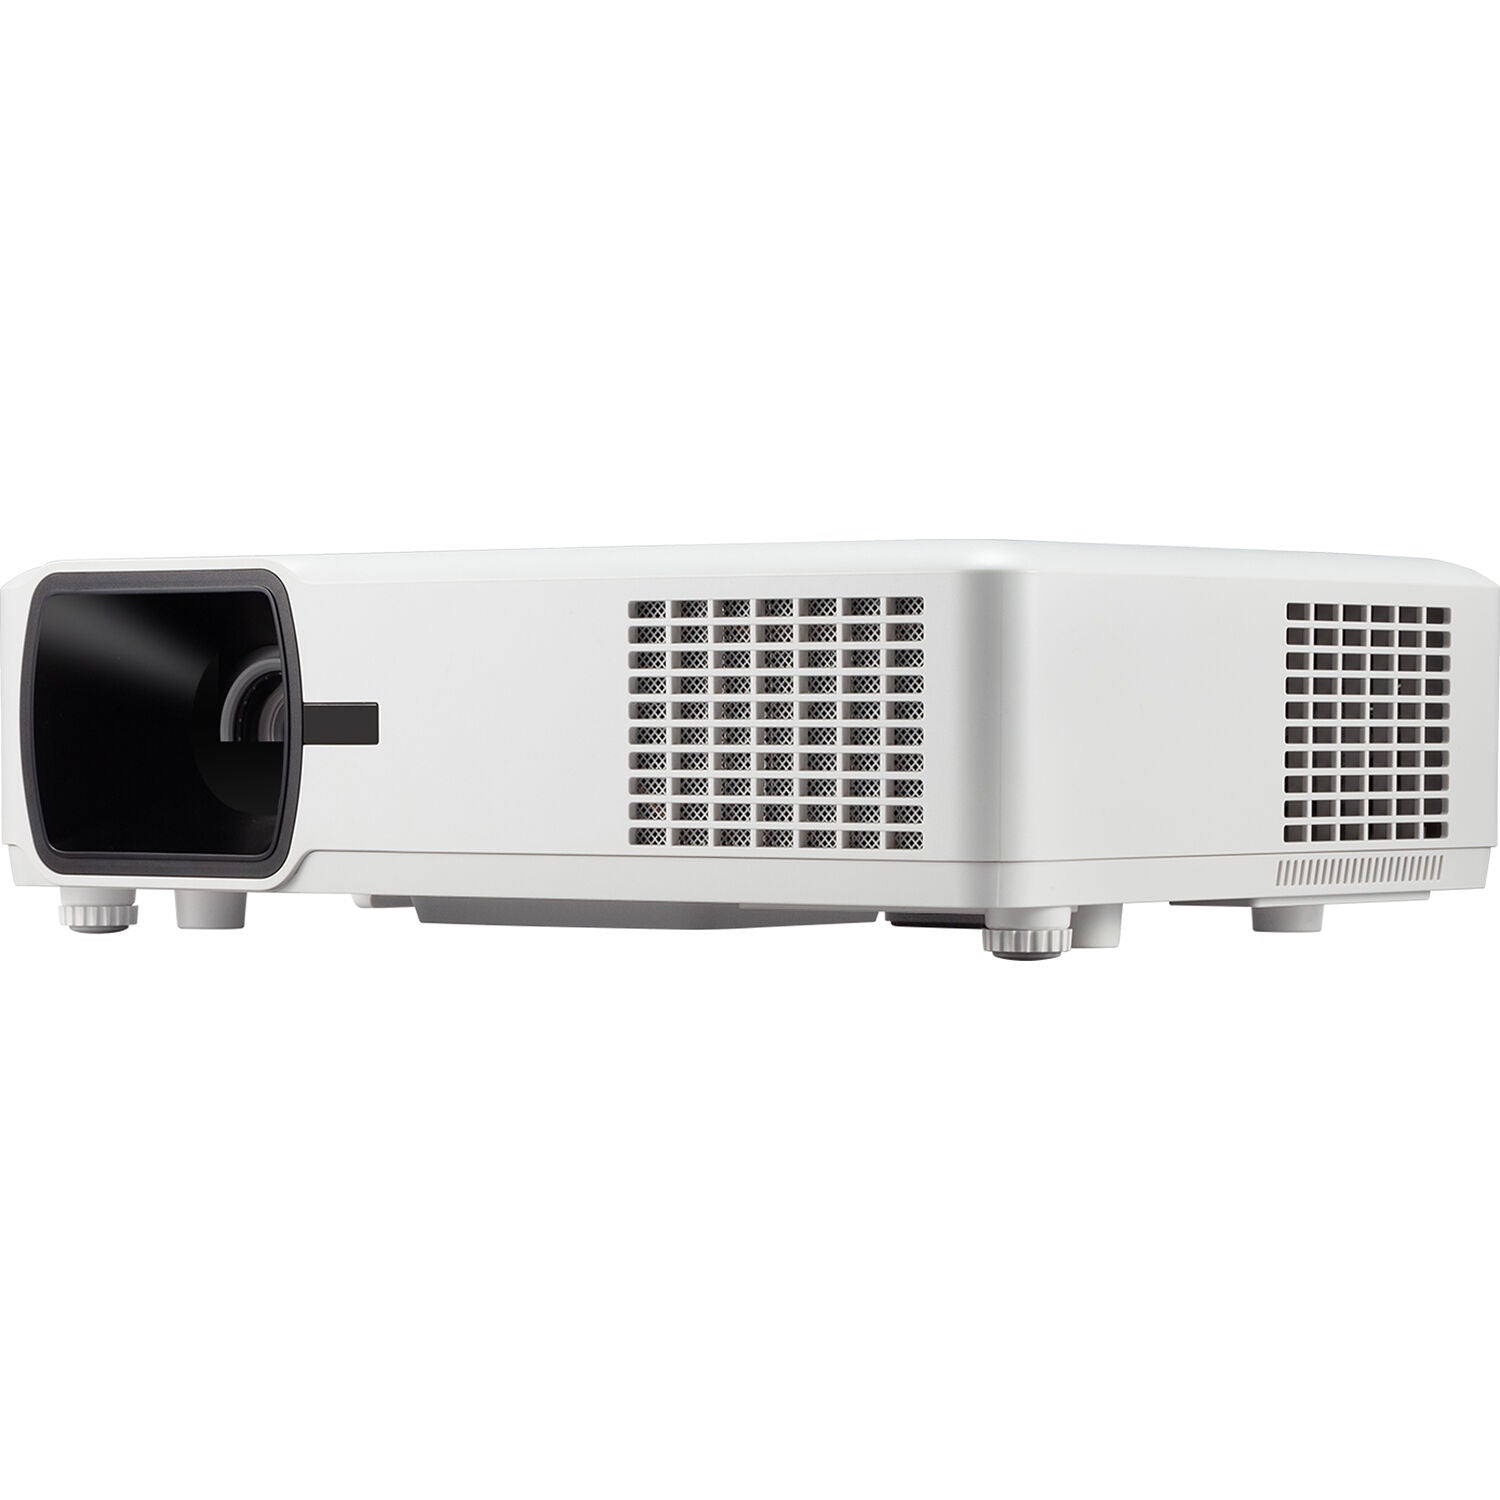 ViewSonic LS600W-S Bright 3000 Lumens WXGA Lamp Free 10W Speaker LED Projector - Certified Refurbished